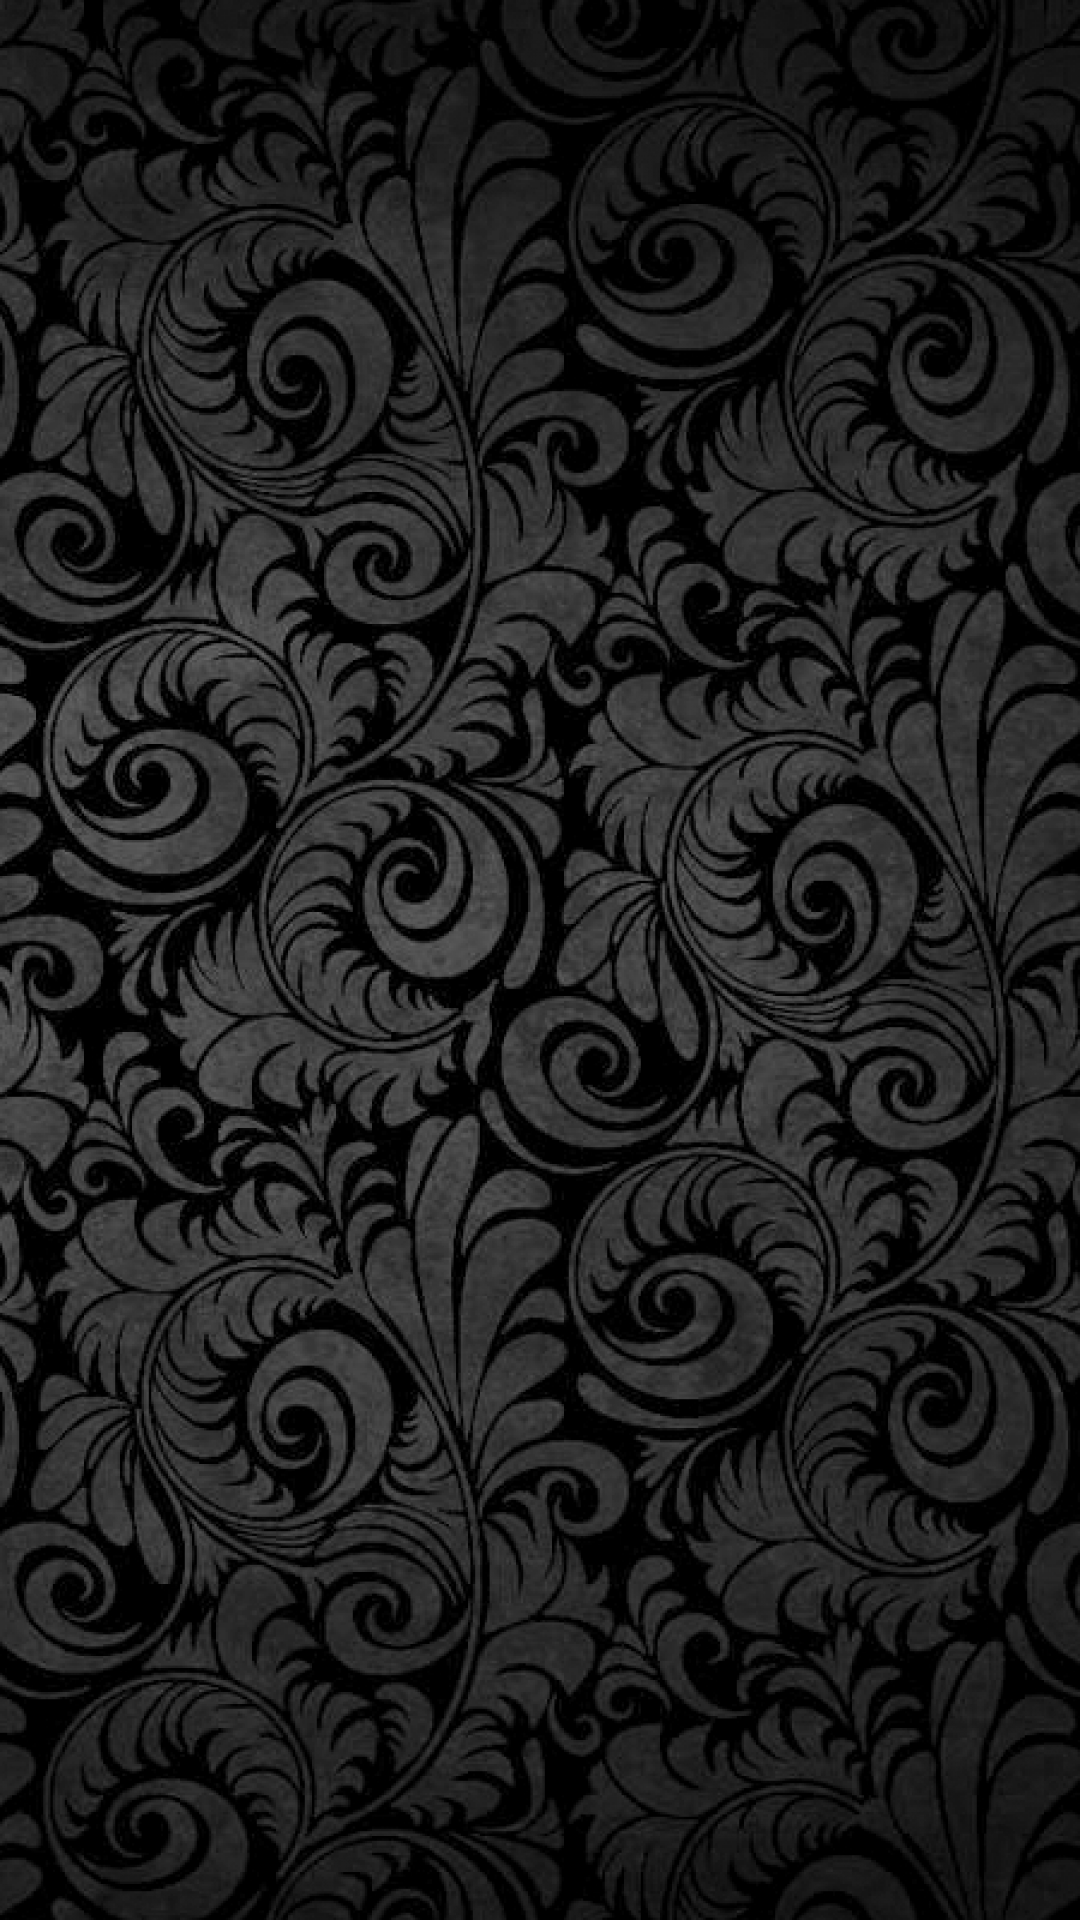 iPhoneXpapers.com | iPhone X wallpaper | vk29-wallpaper-design-flower-line- dark-bw-pattern